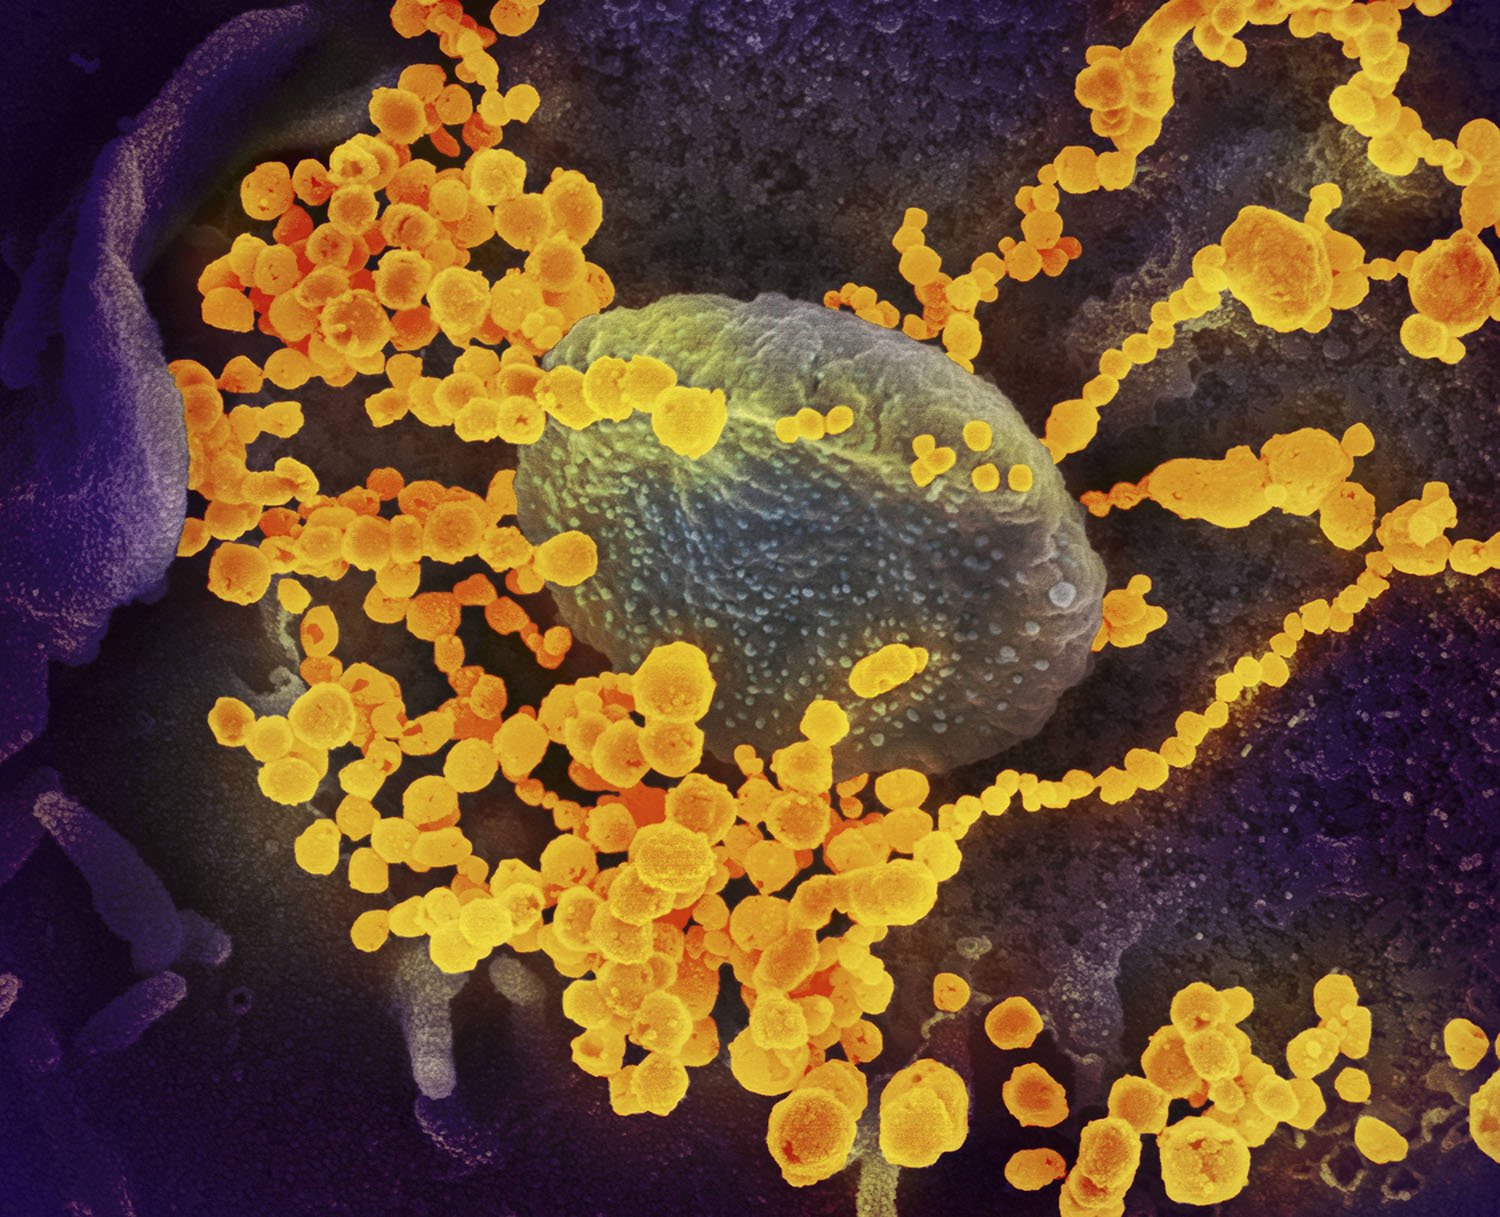 Células humanas rodeadas de virus